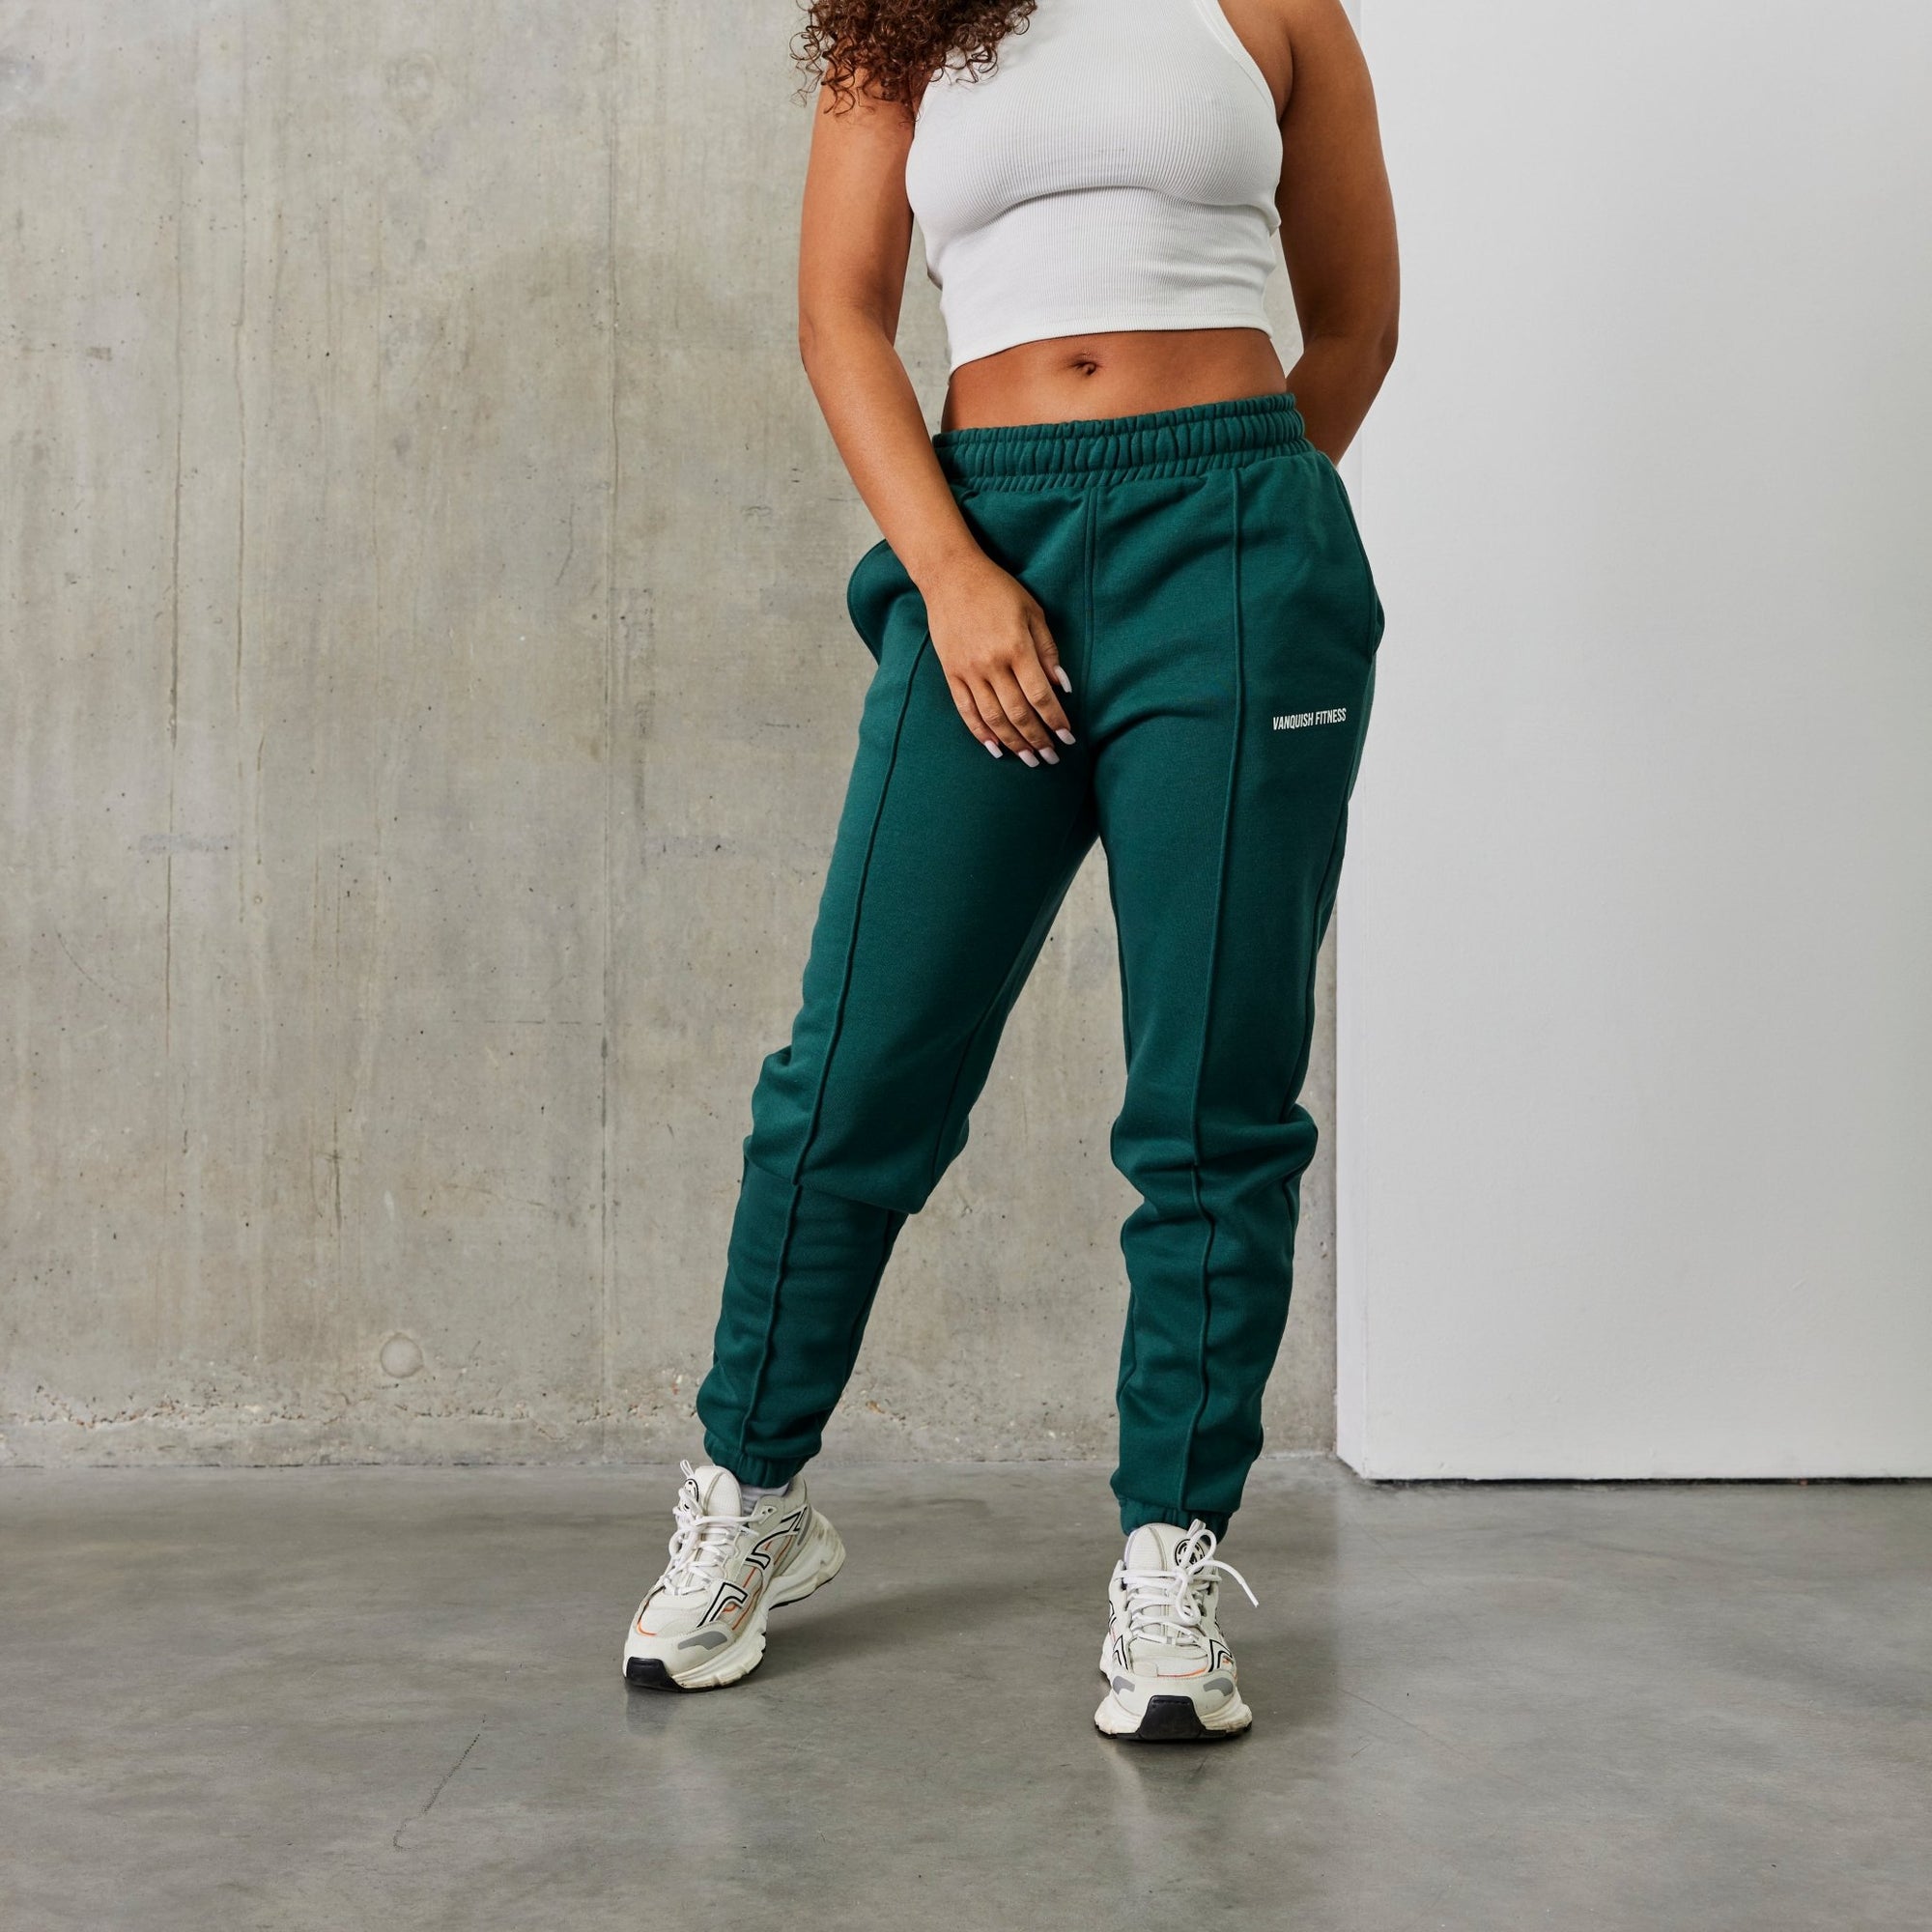 Vanquish Balance Green Pintuck Sweatpants - Vanquish Fitness